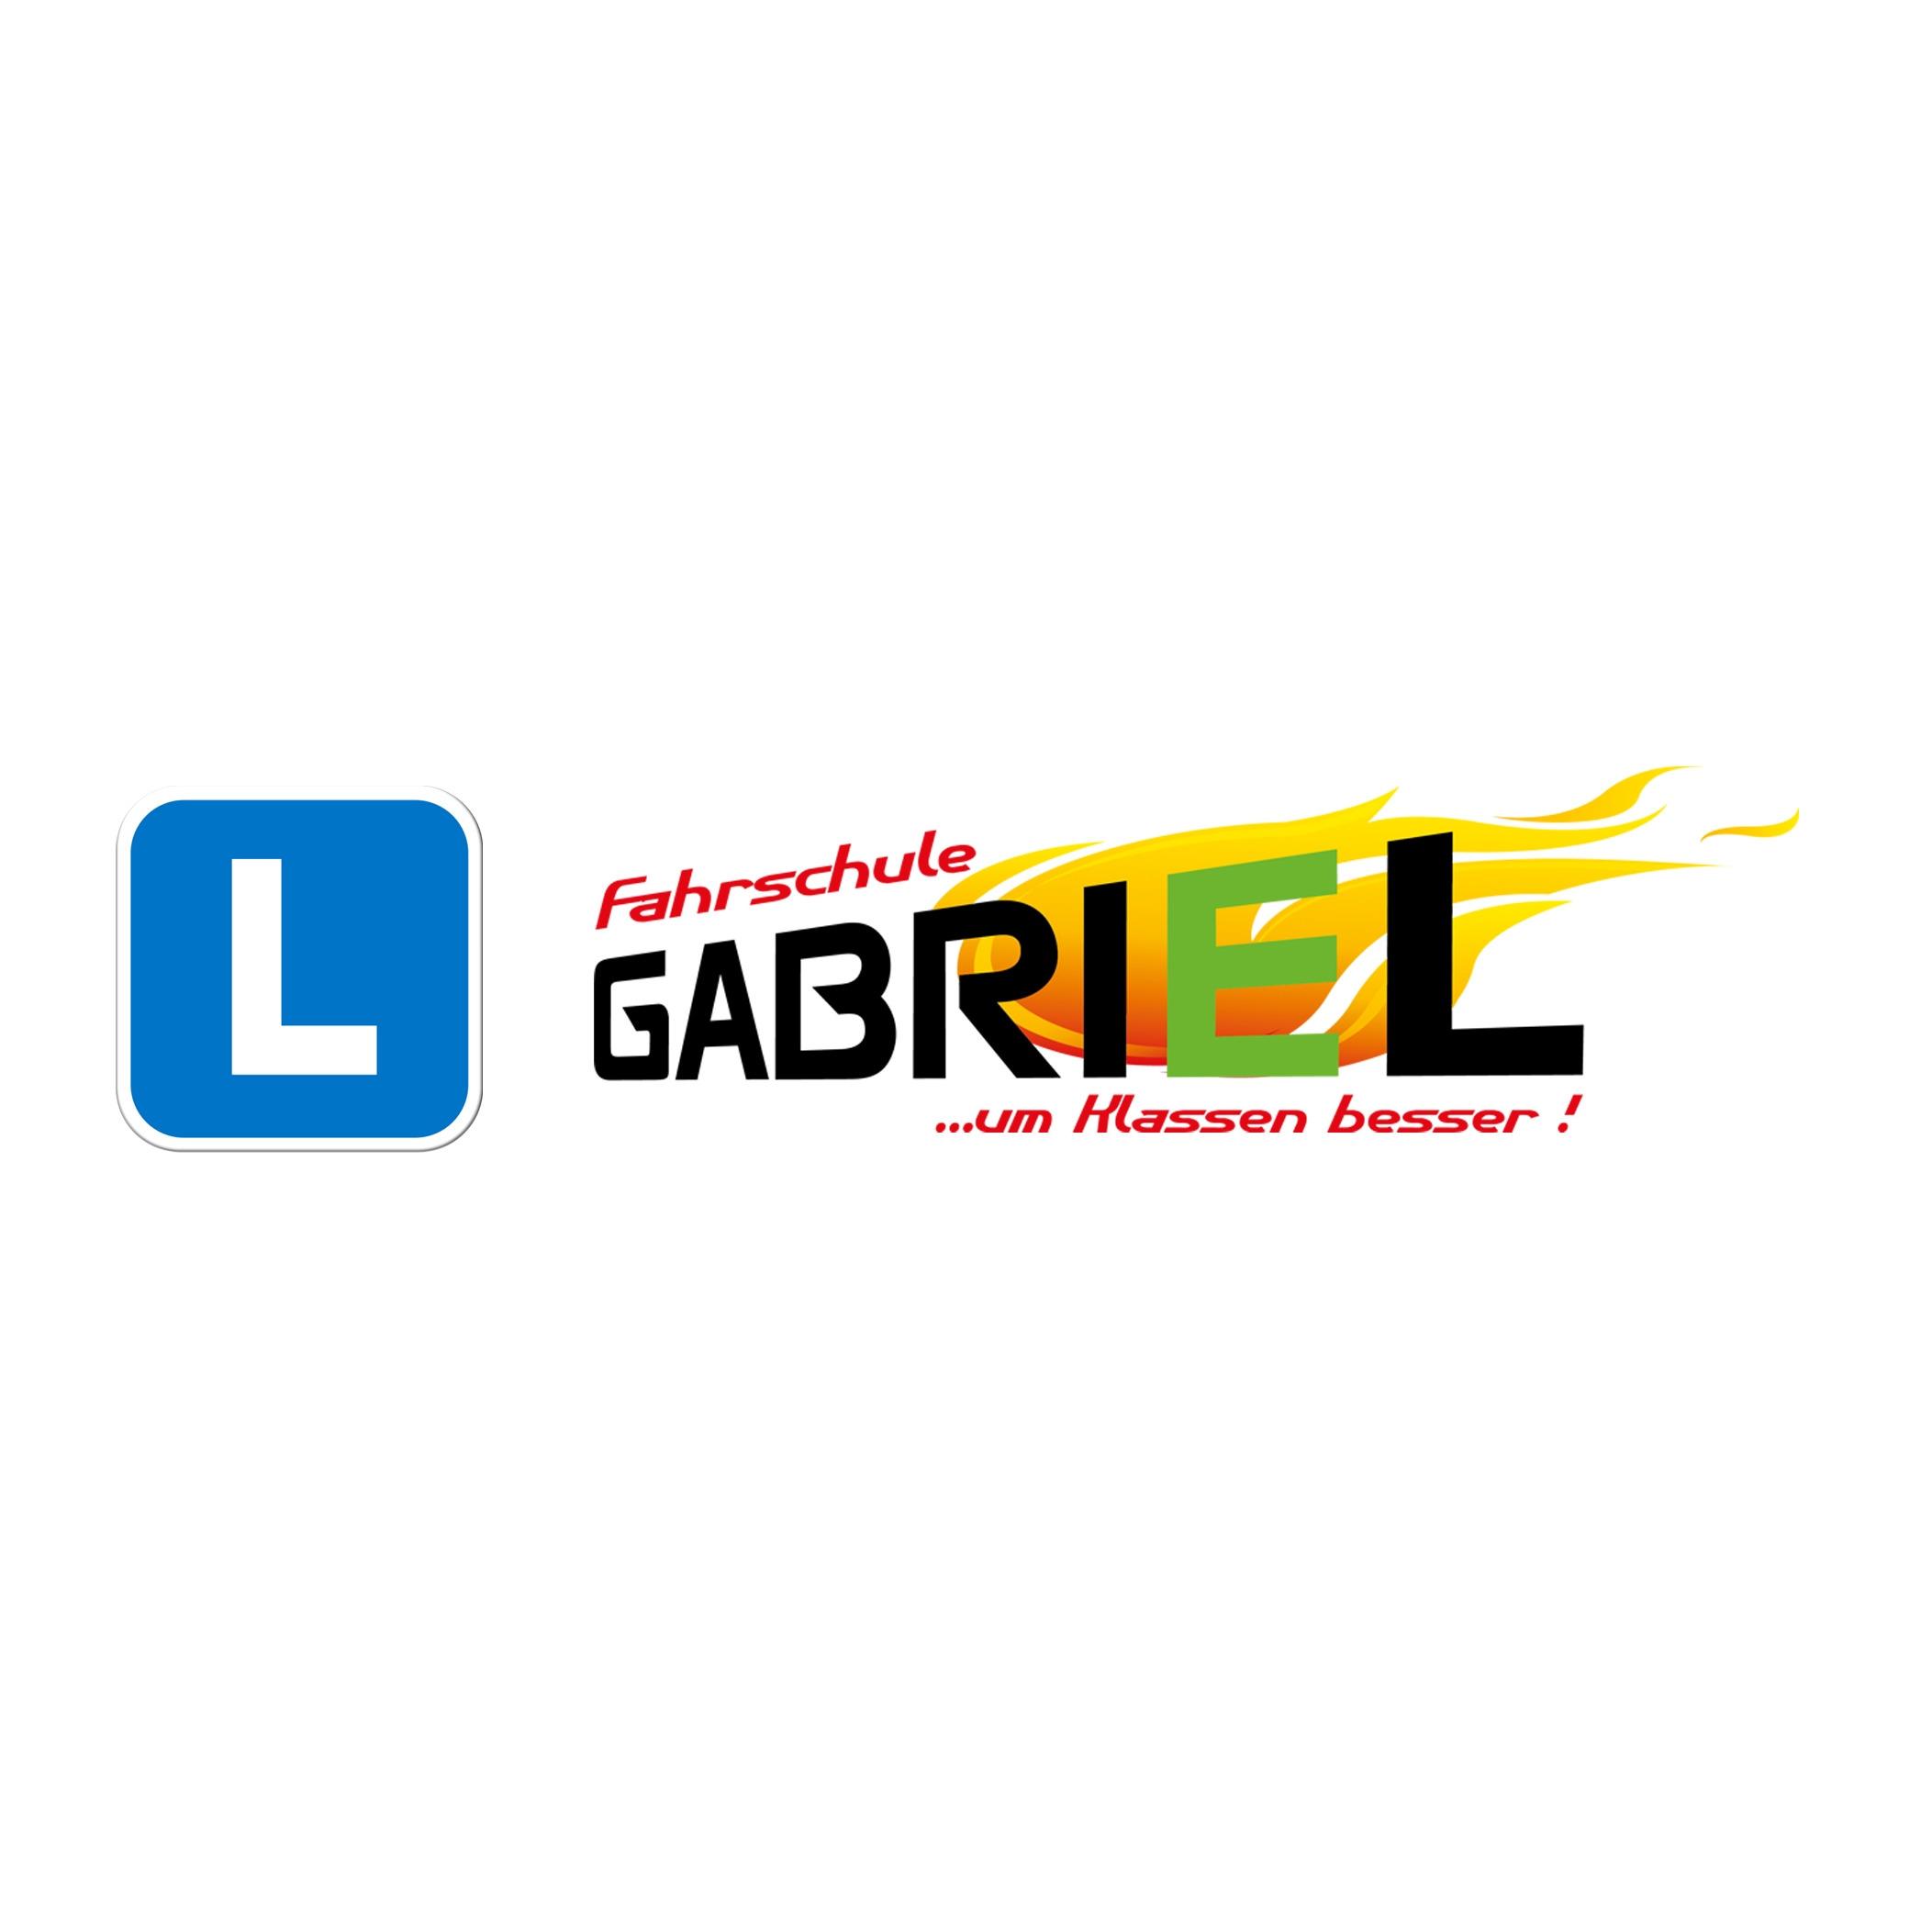 Fahrschule Gabriel Logo